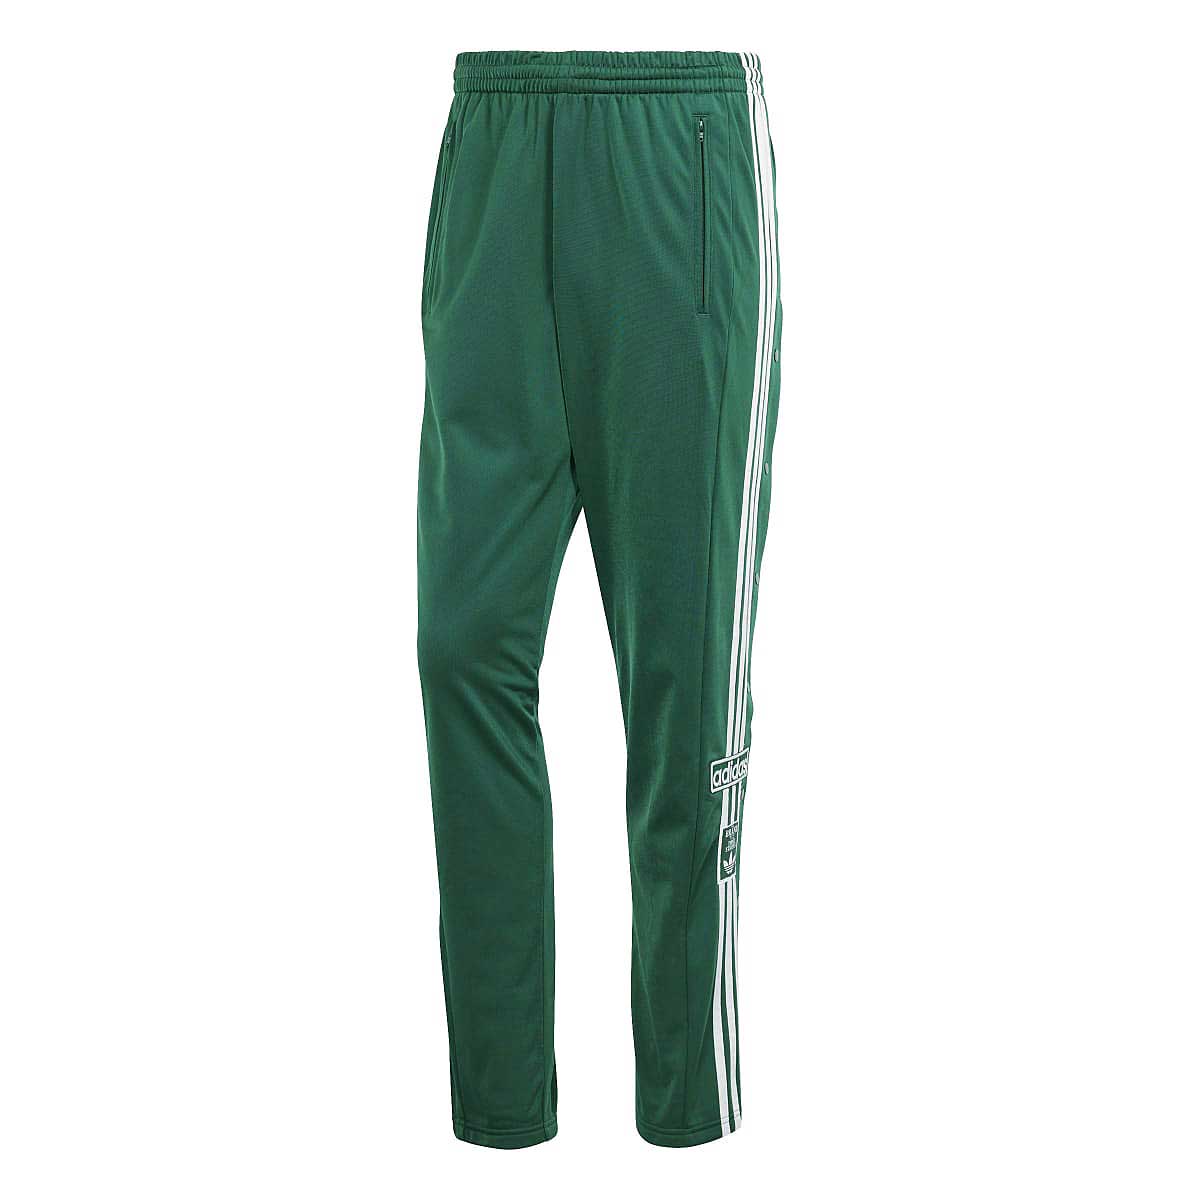 Adidas Adibreak Pants, Green S